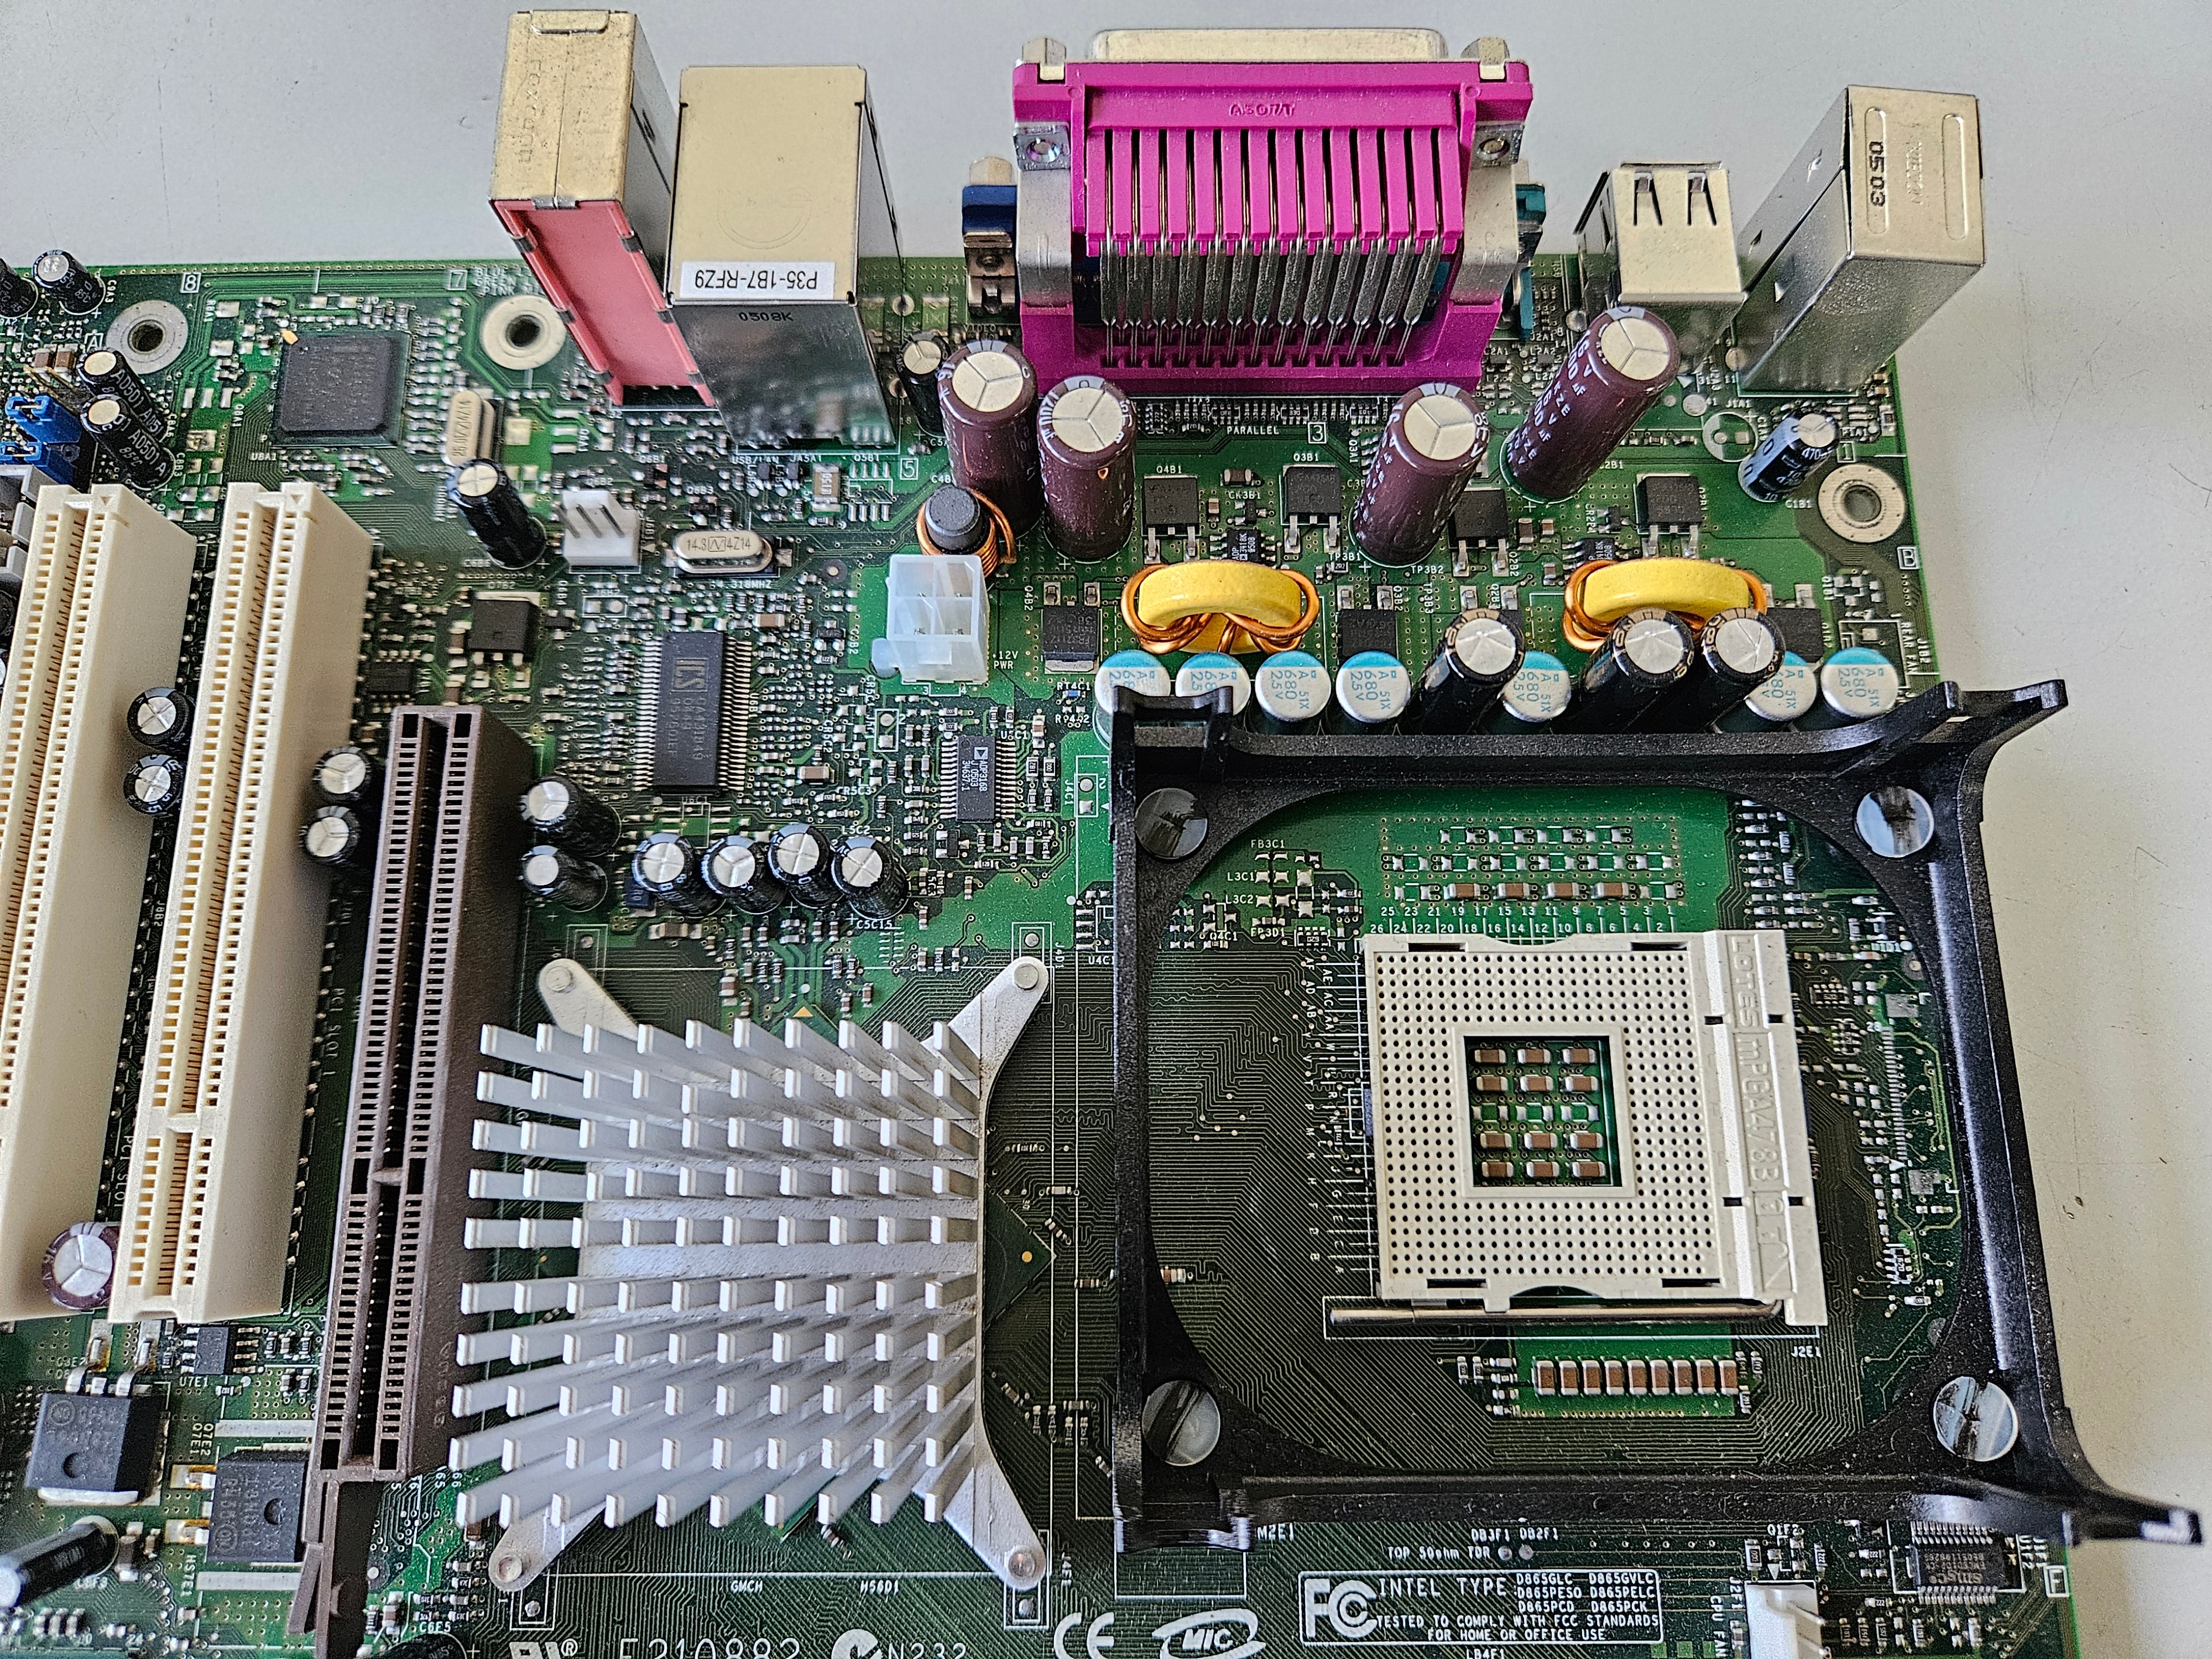 Intel E210882 AGP Micro-ATX Socket 478 Motherboard ( C28906-410 D865GLC D865PESO D865PCD D865PCK ) USED